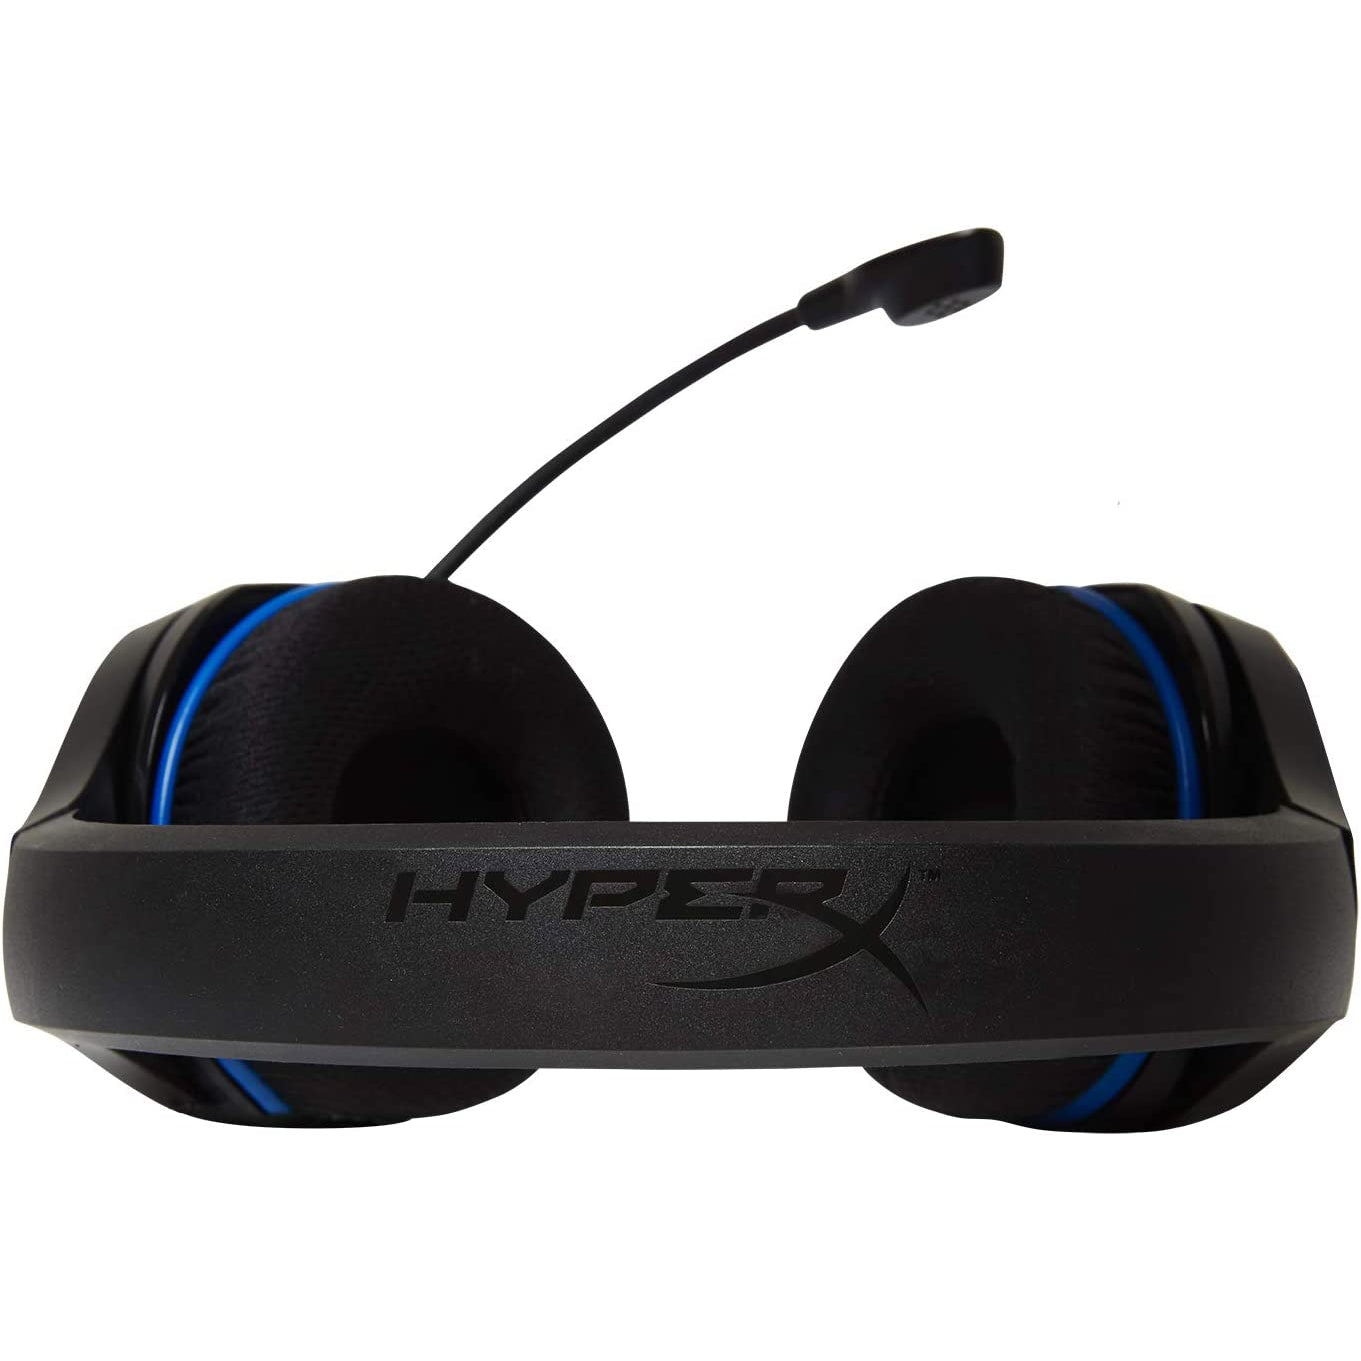 HyperX Cloud Stinger Core Gaming Headset - Black / Blue - Pristine